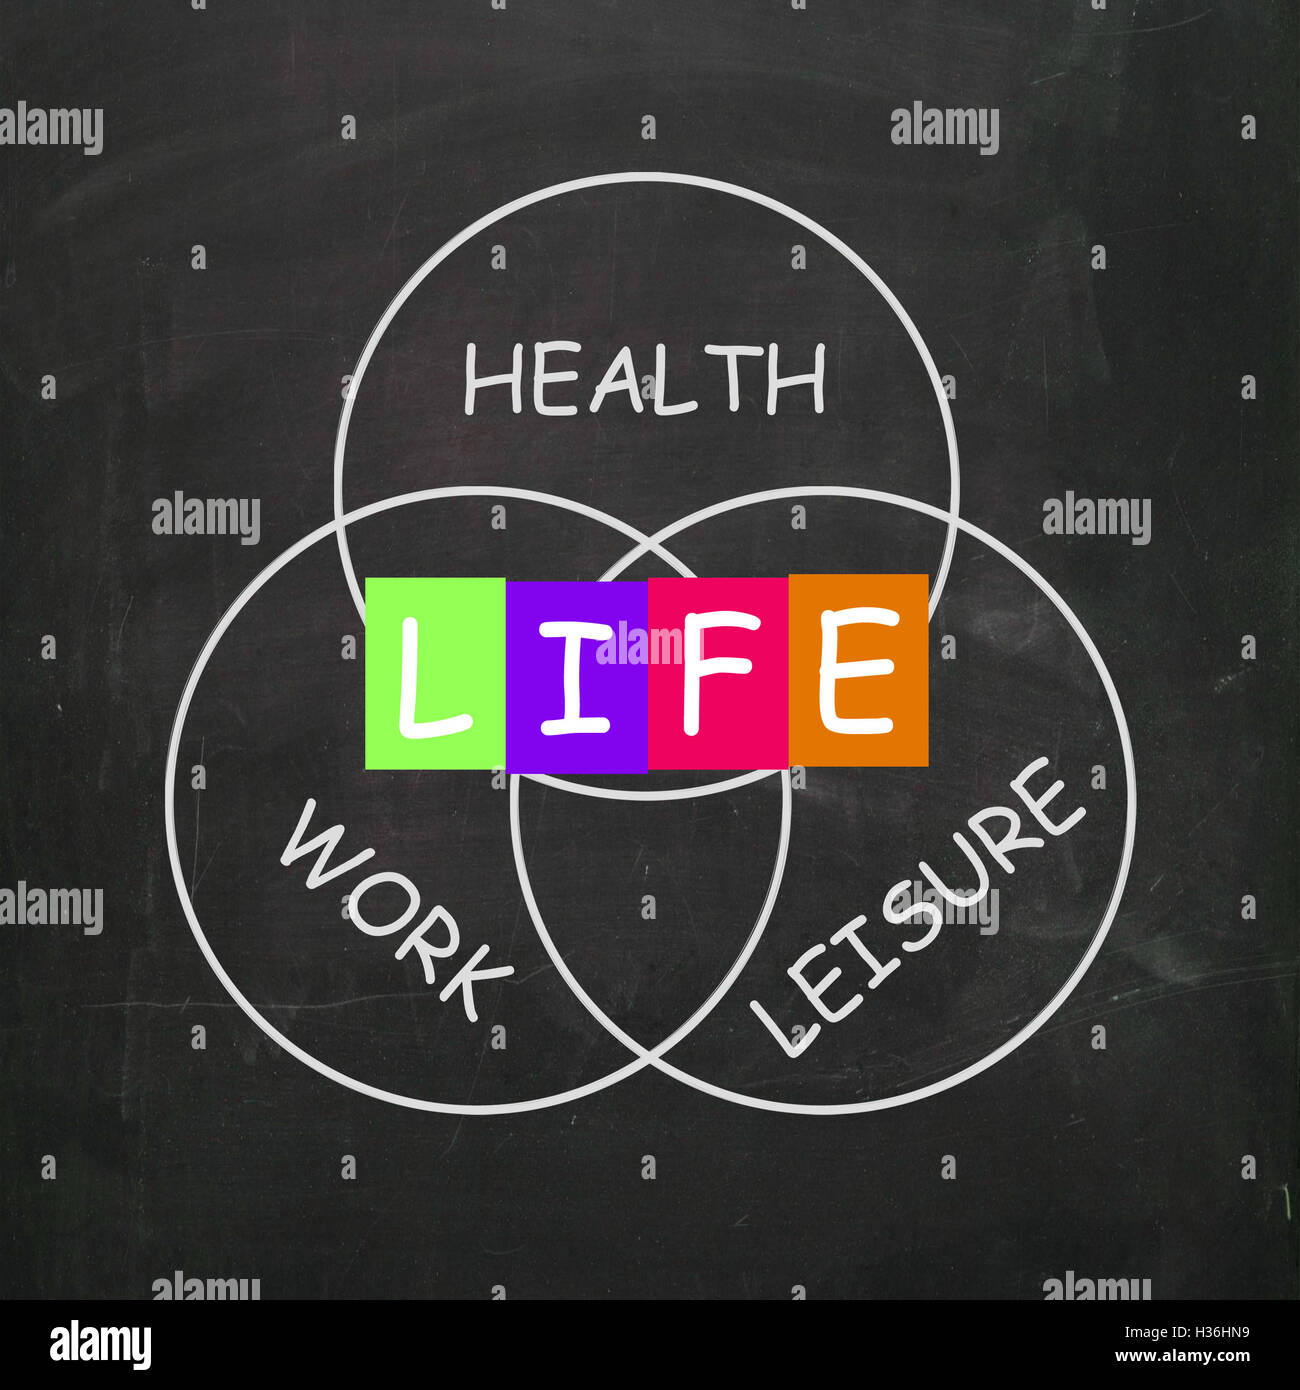 Balance Life with Health Leisure and Work Stock Photo